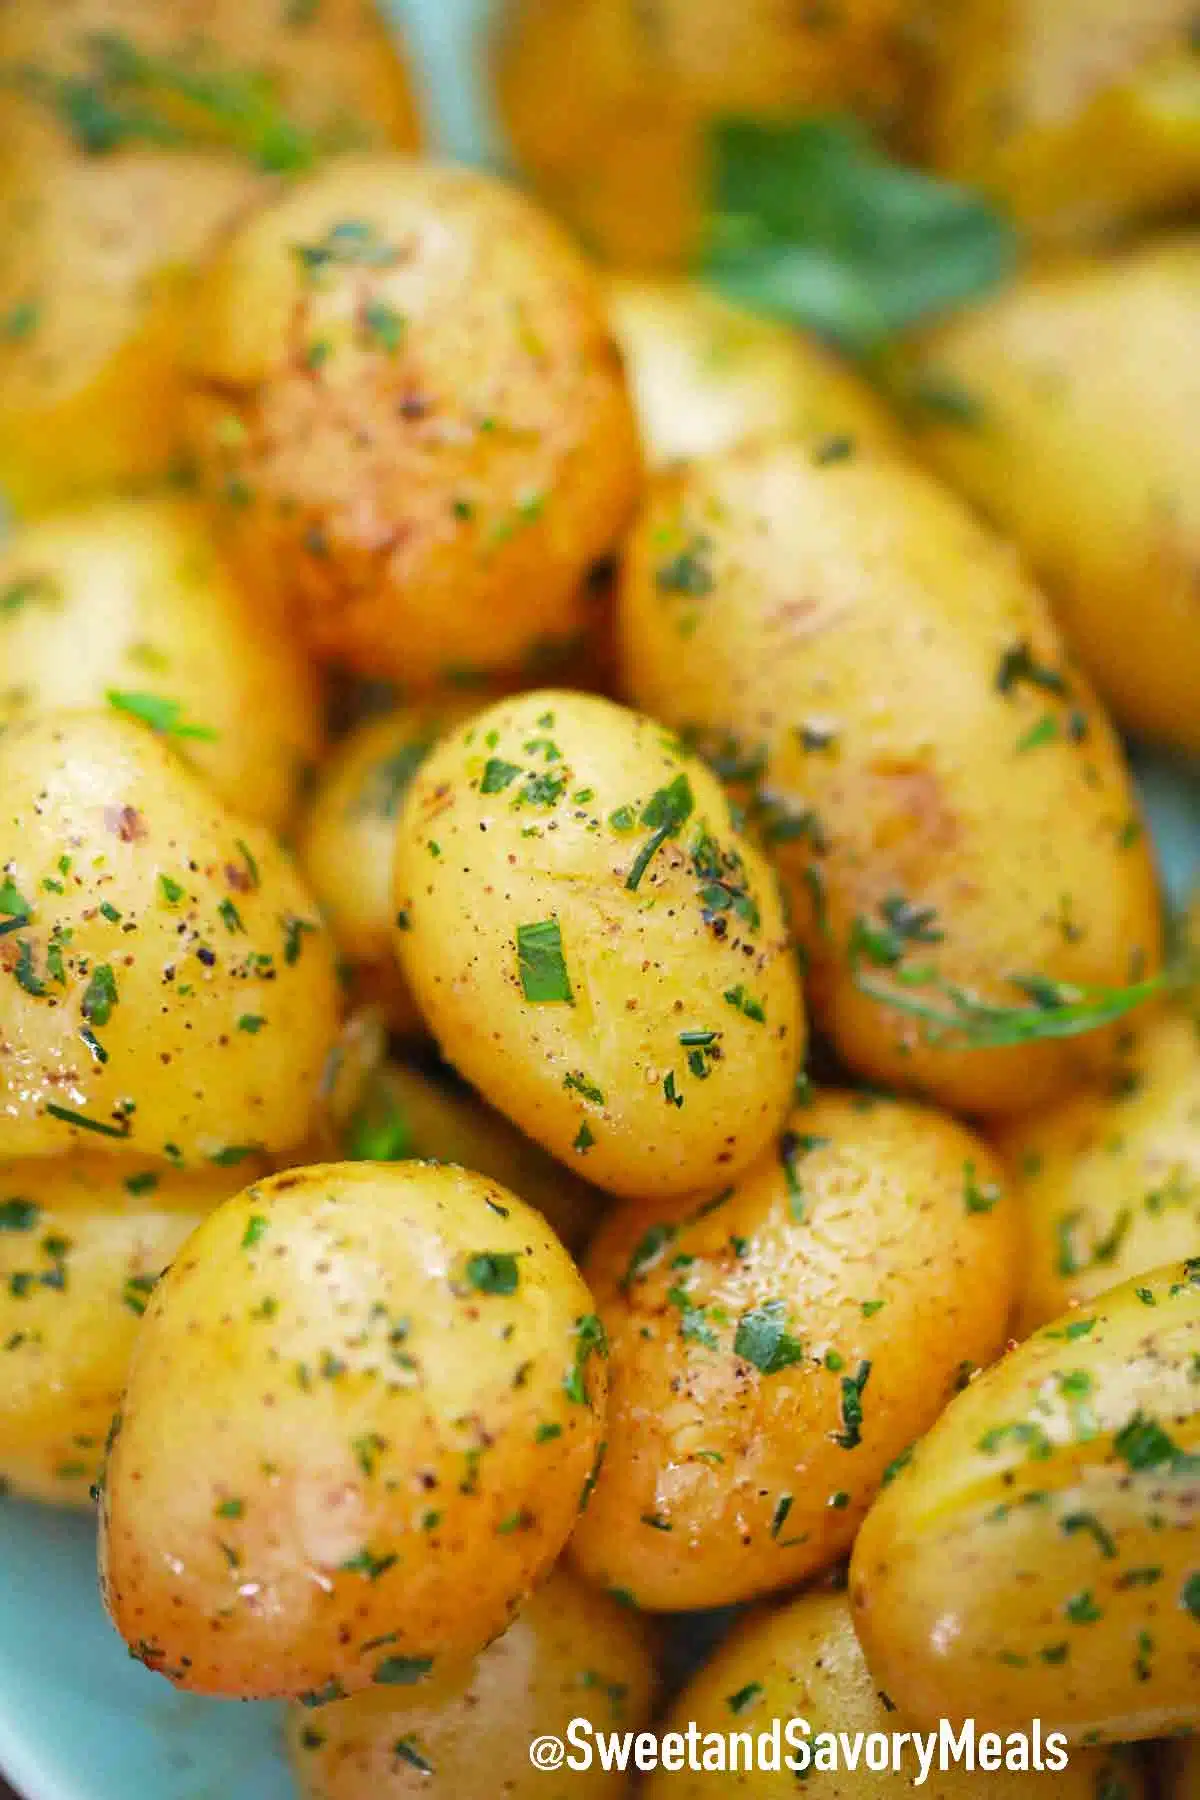 https://sweetandsavorymeals.com/wp-content/uploads/2022/04/boiled-potatoes.jpg